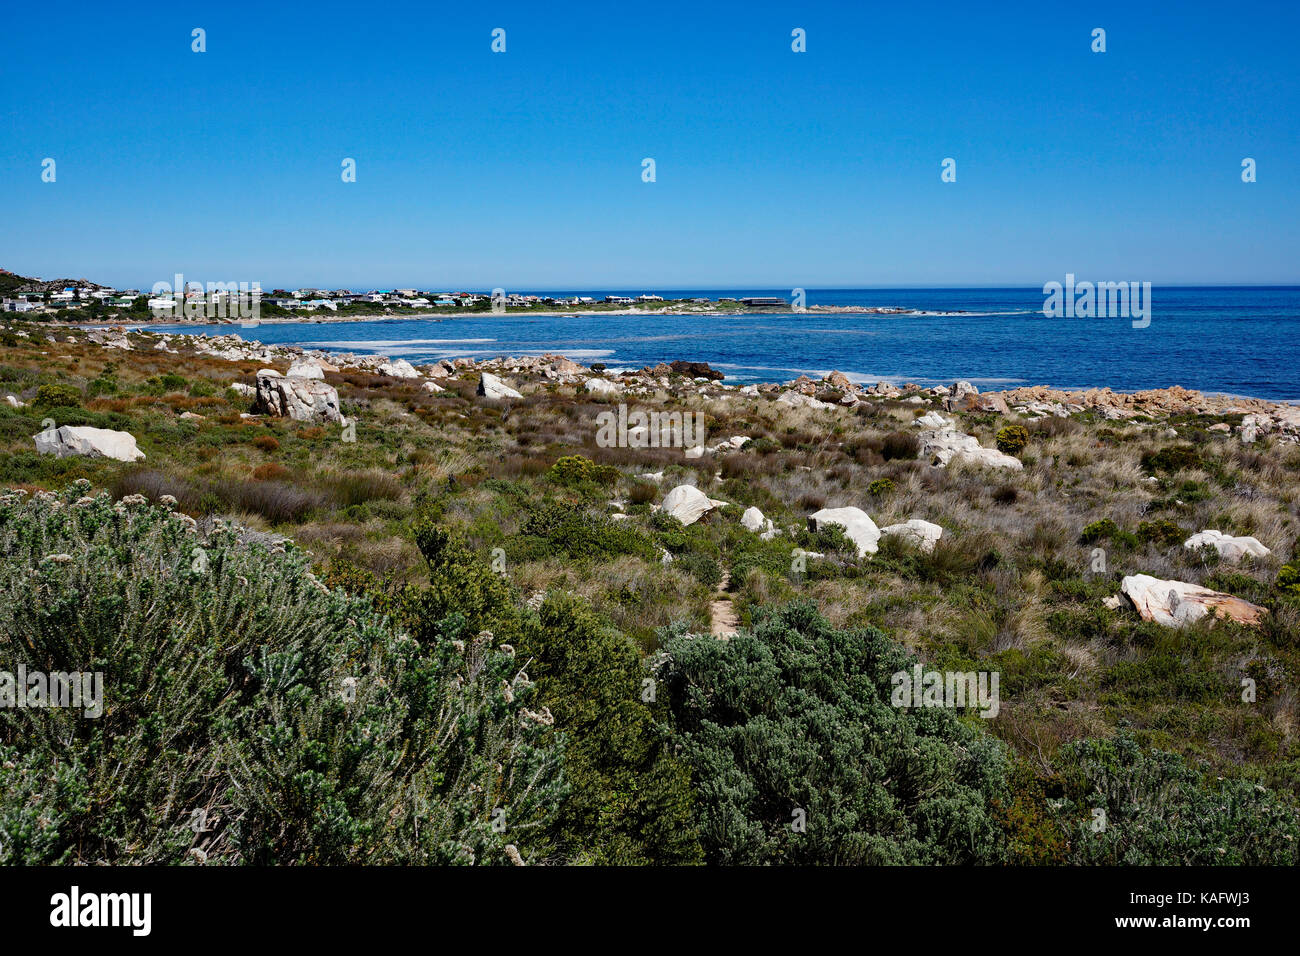 False Bay con rooi els in background, provincia occidentale, sud africa. Foto Stock